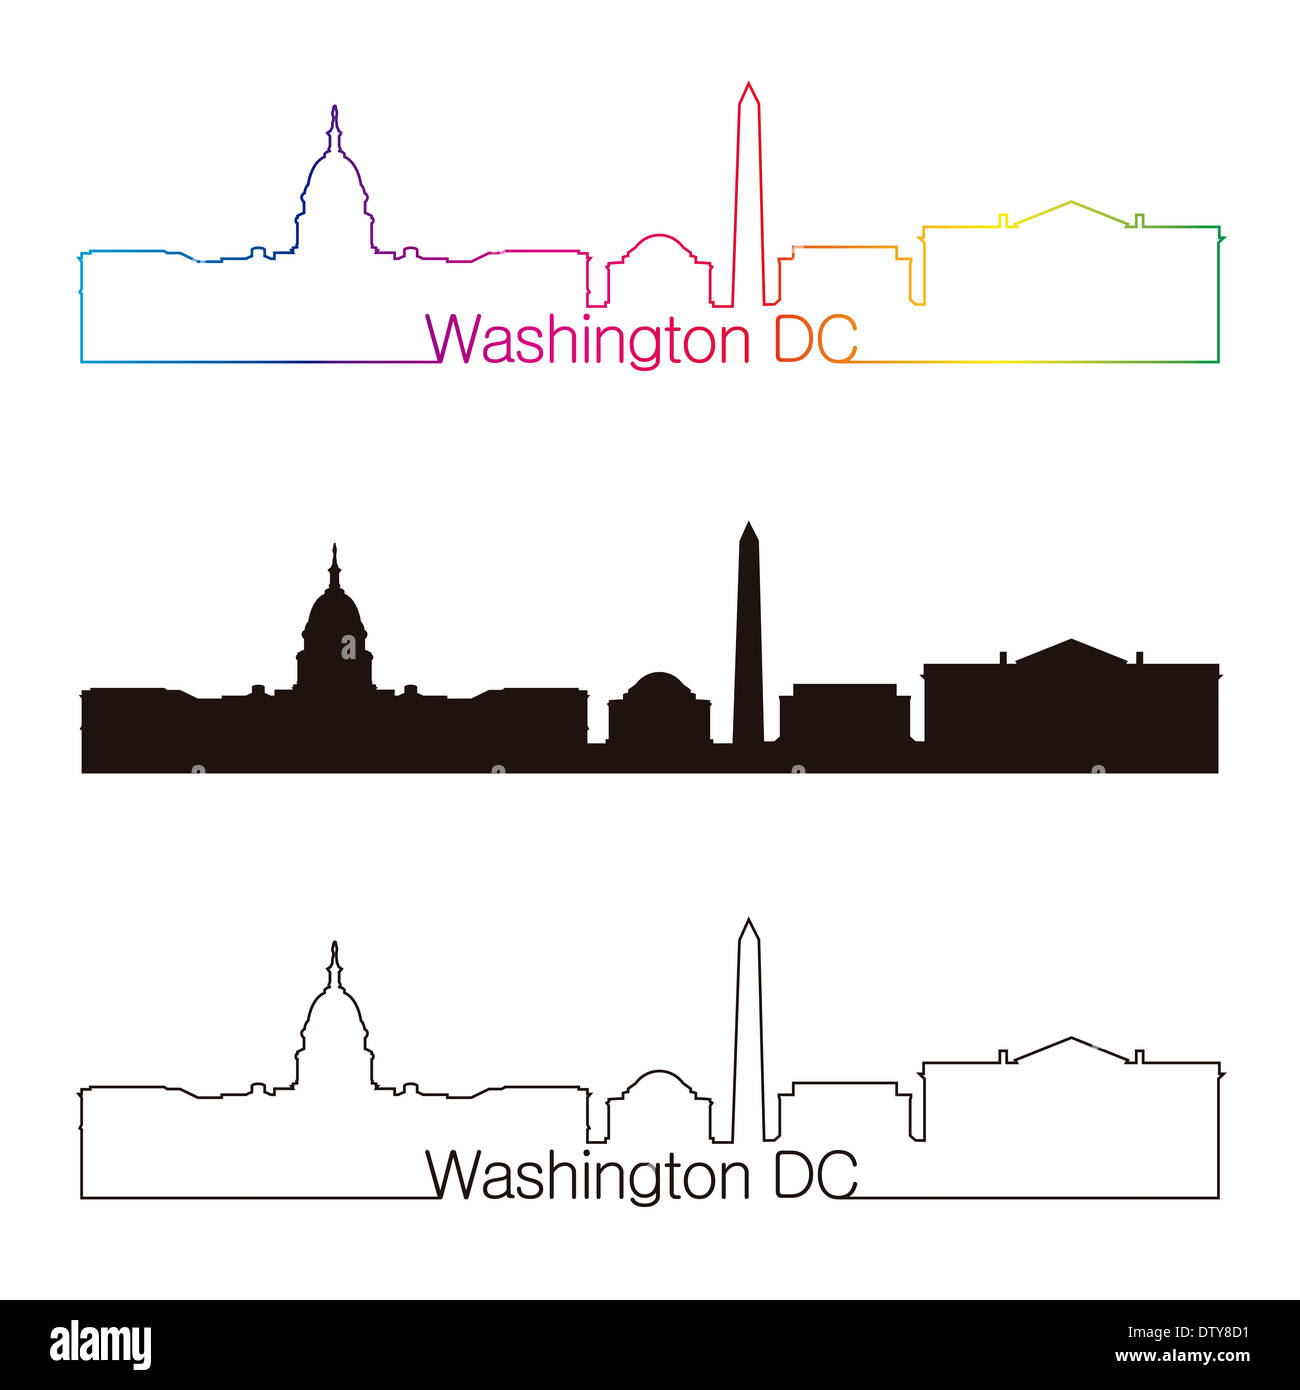 Washington DC skyline stile lineare con rainbow Foto Stock